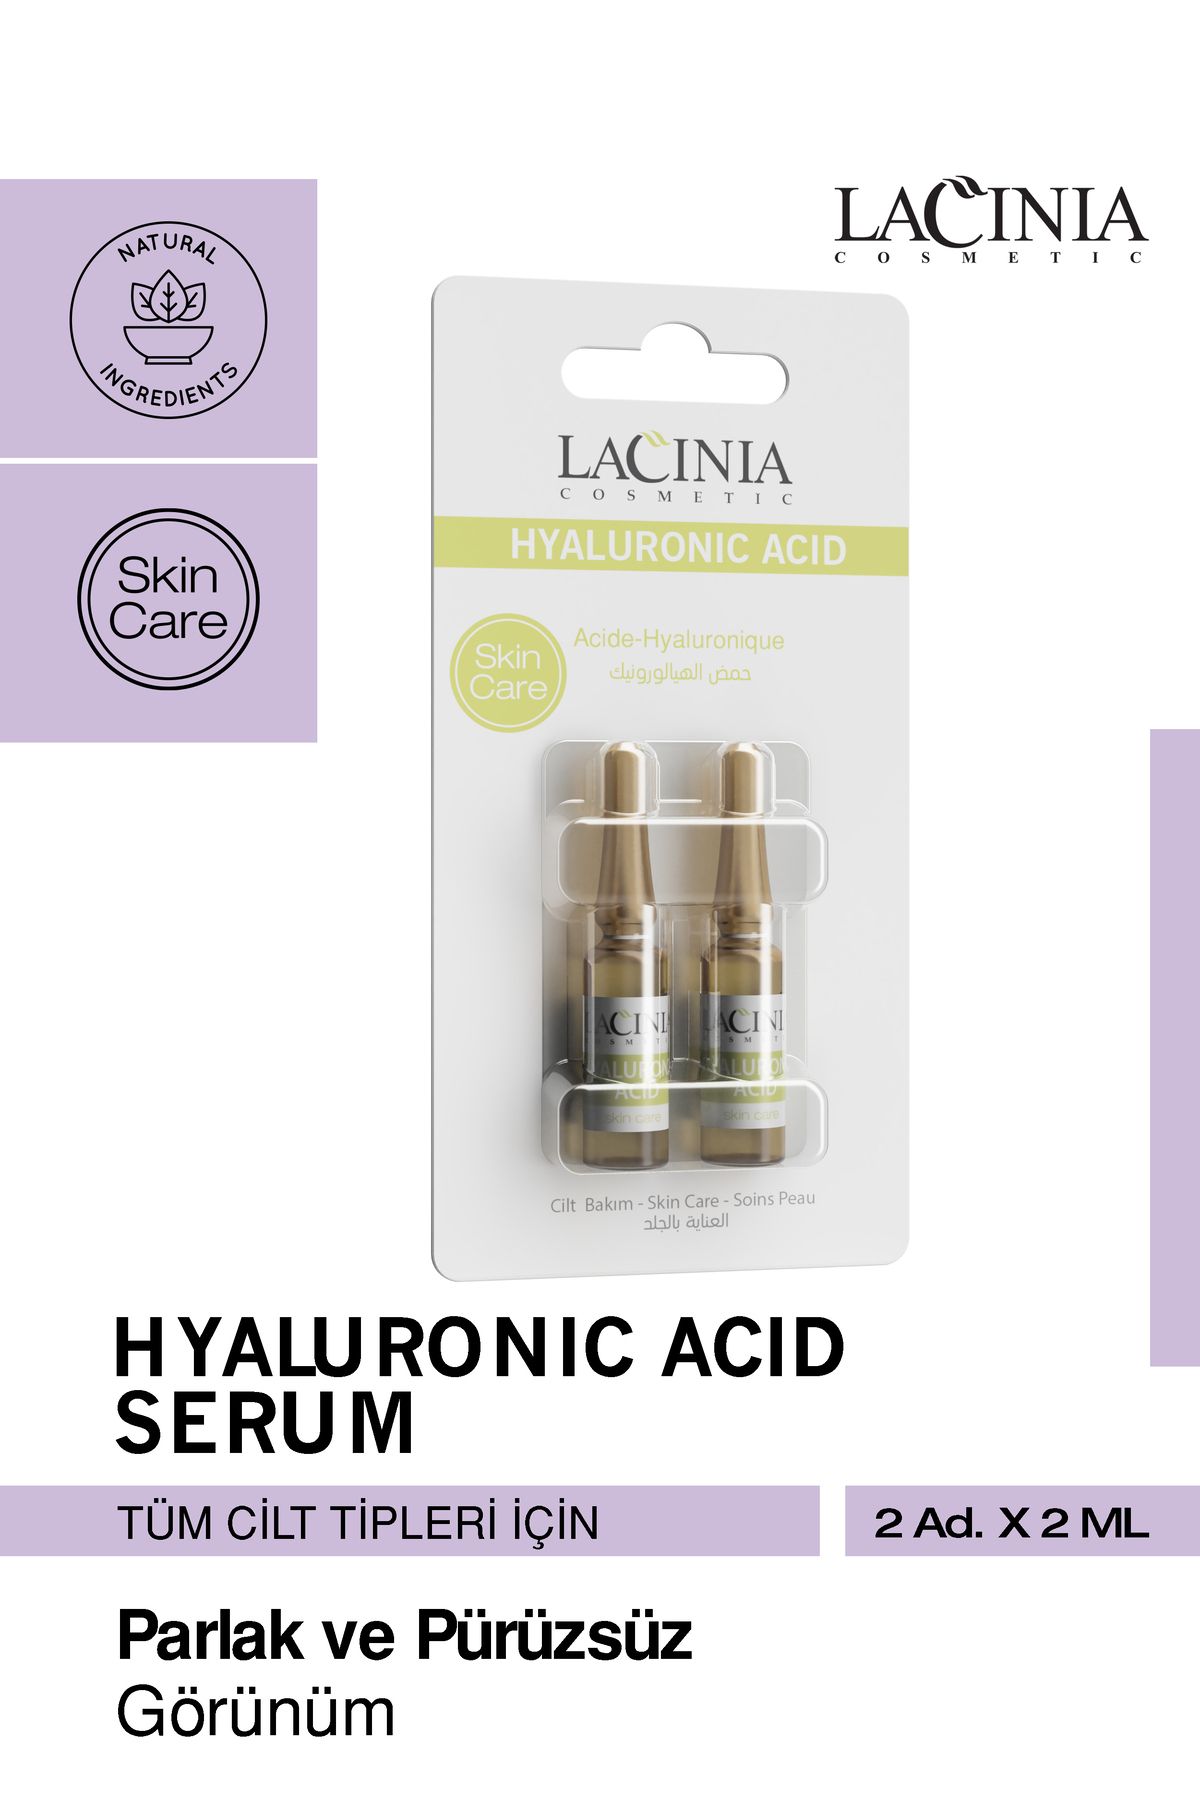 Lacinia Hyaluronic Acid Serum